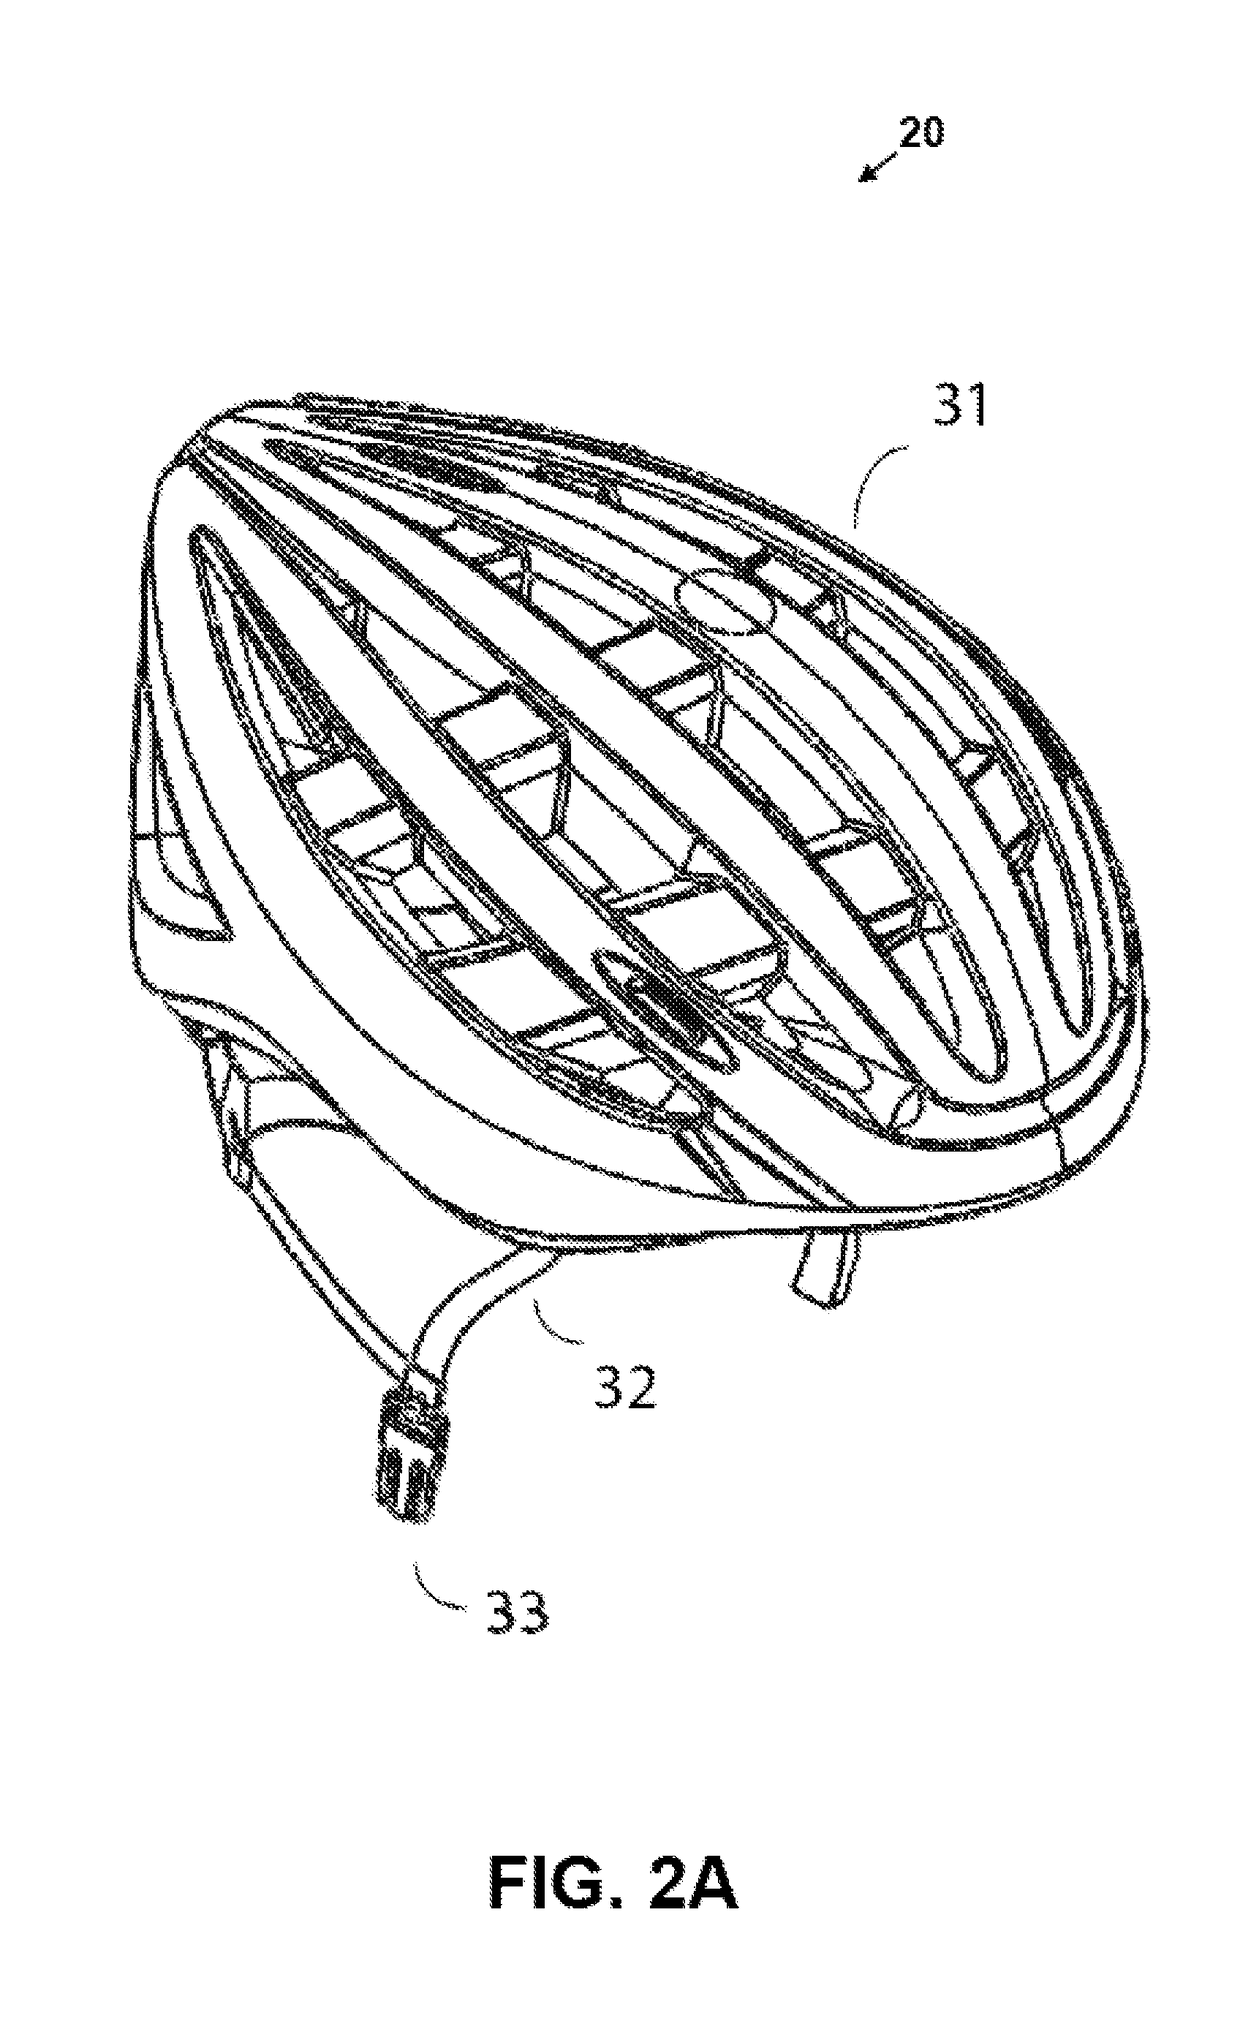 Helmet and helmet system